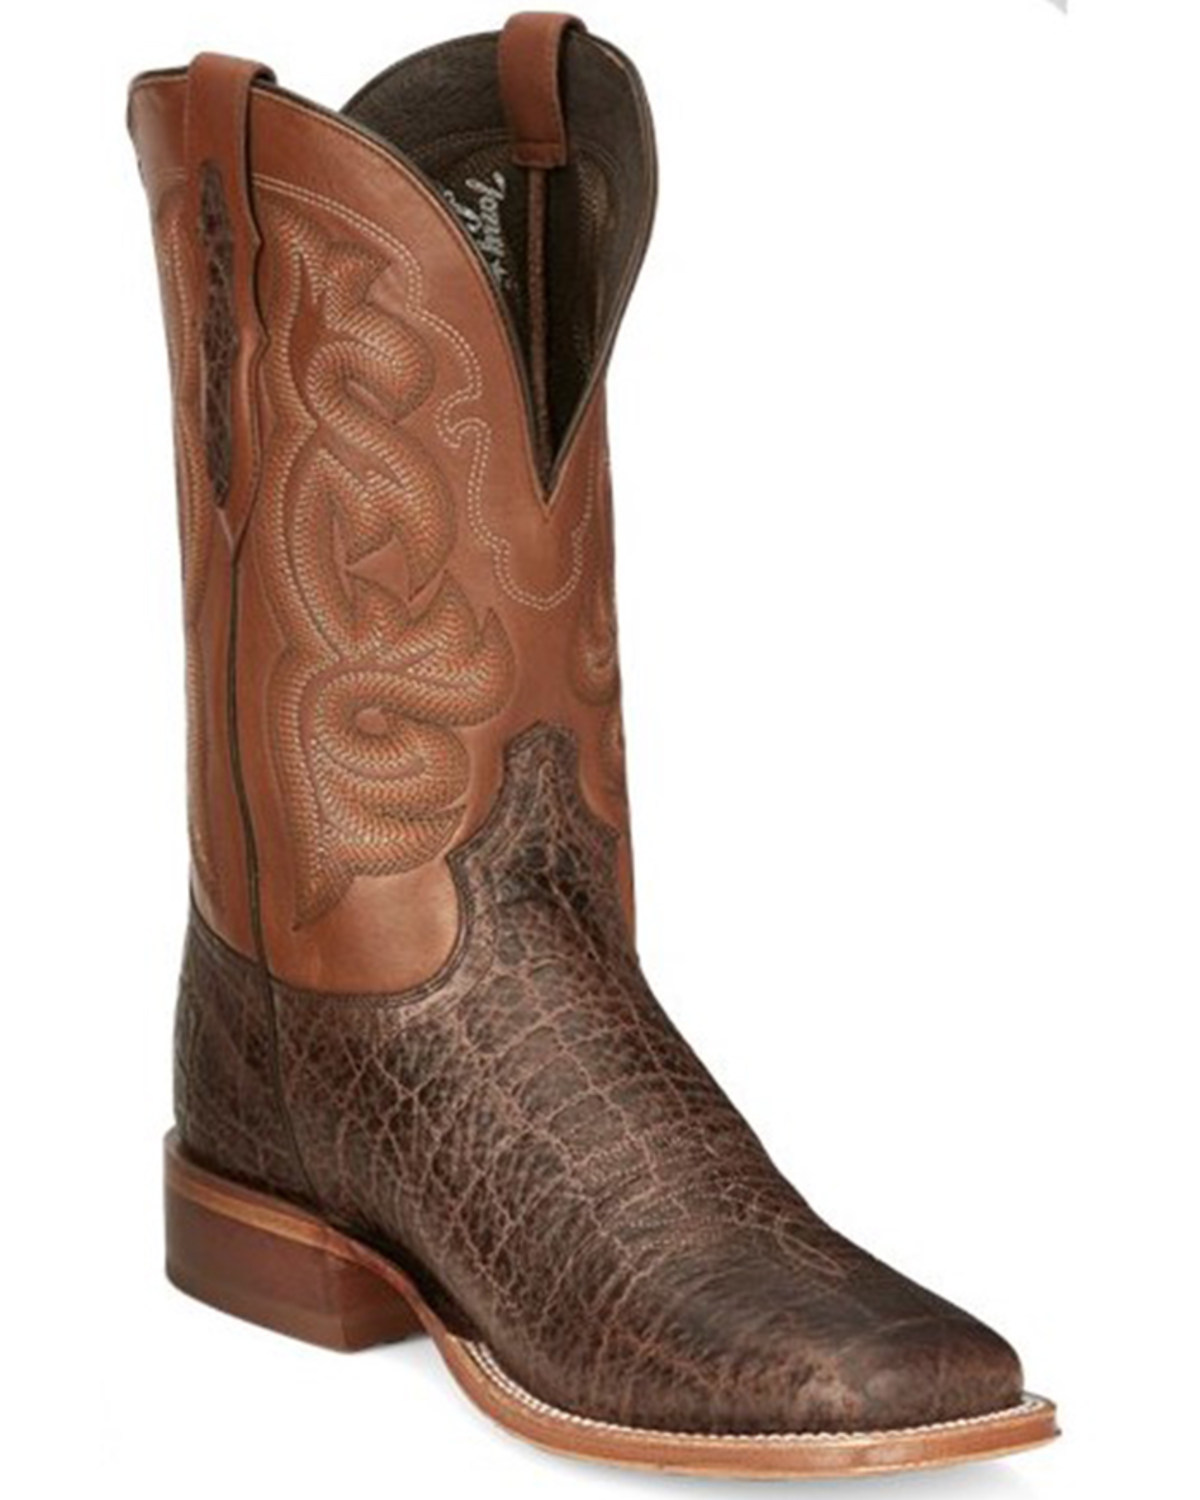 Tony Lama Men's Rowel Safari Cowhide Leather Western Boots - Square Toe